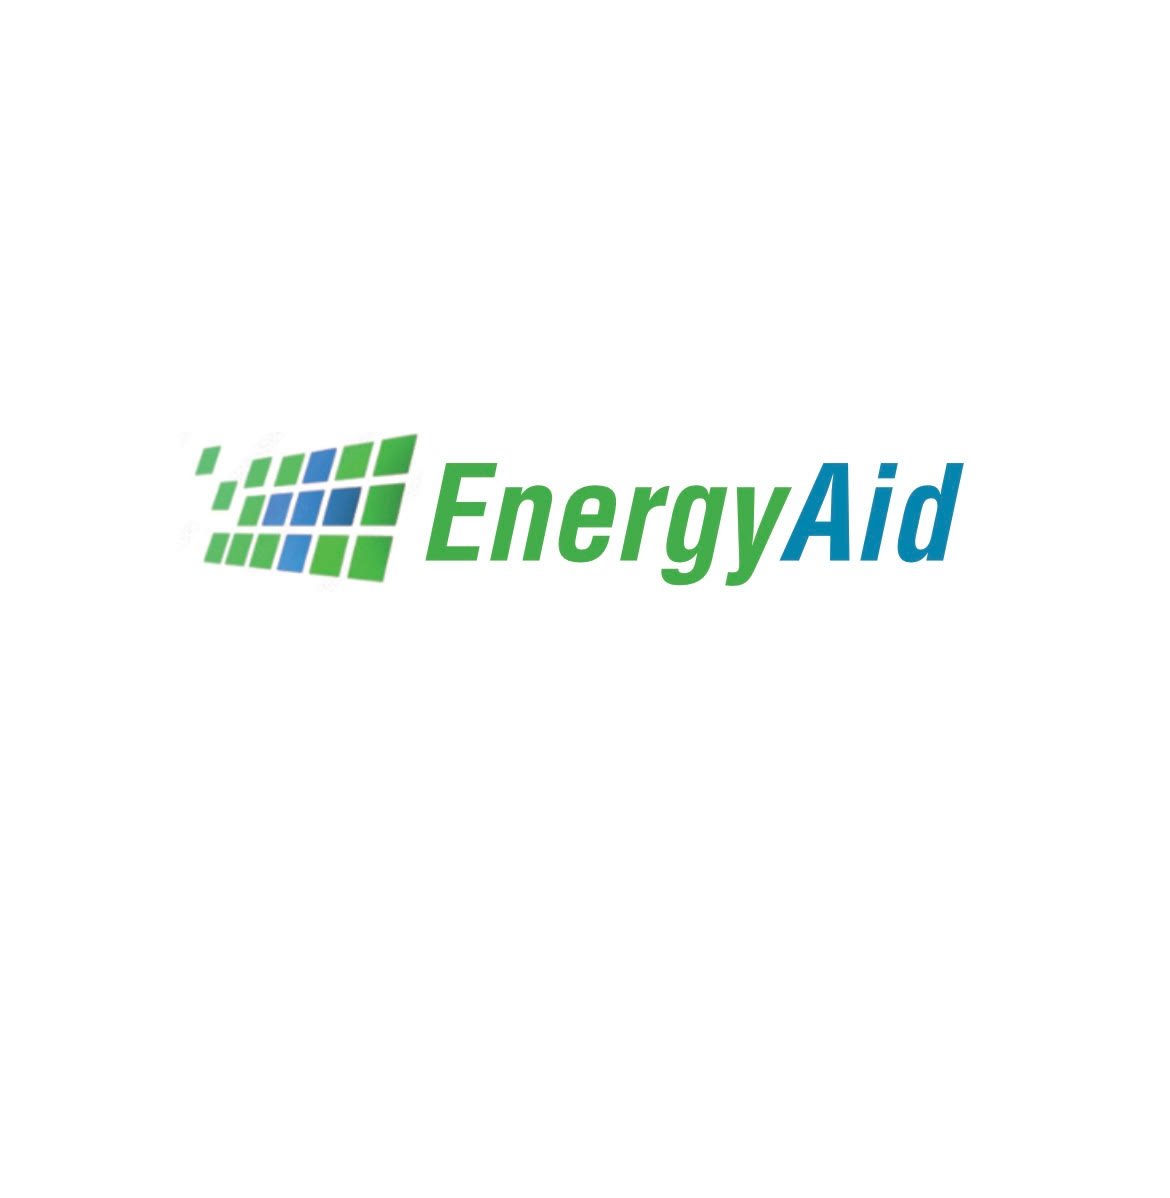 EnergyAid Logo